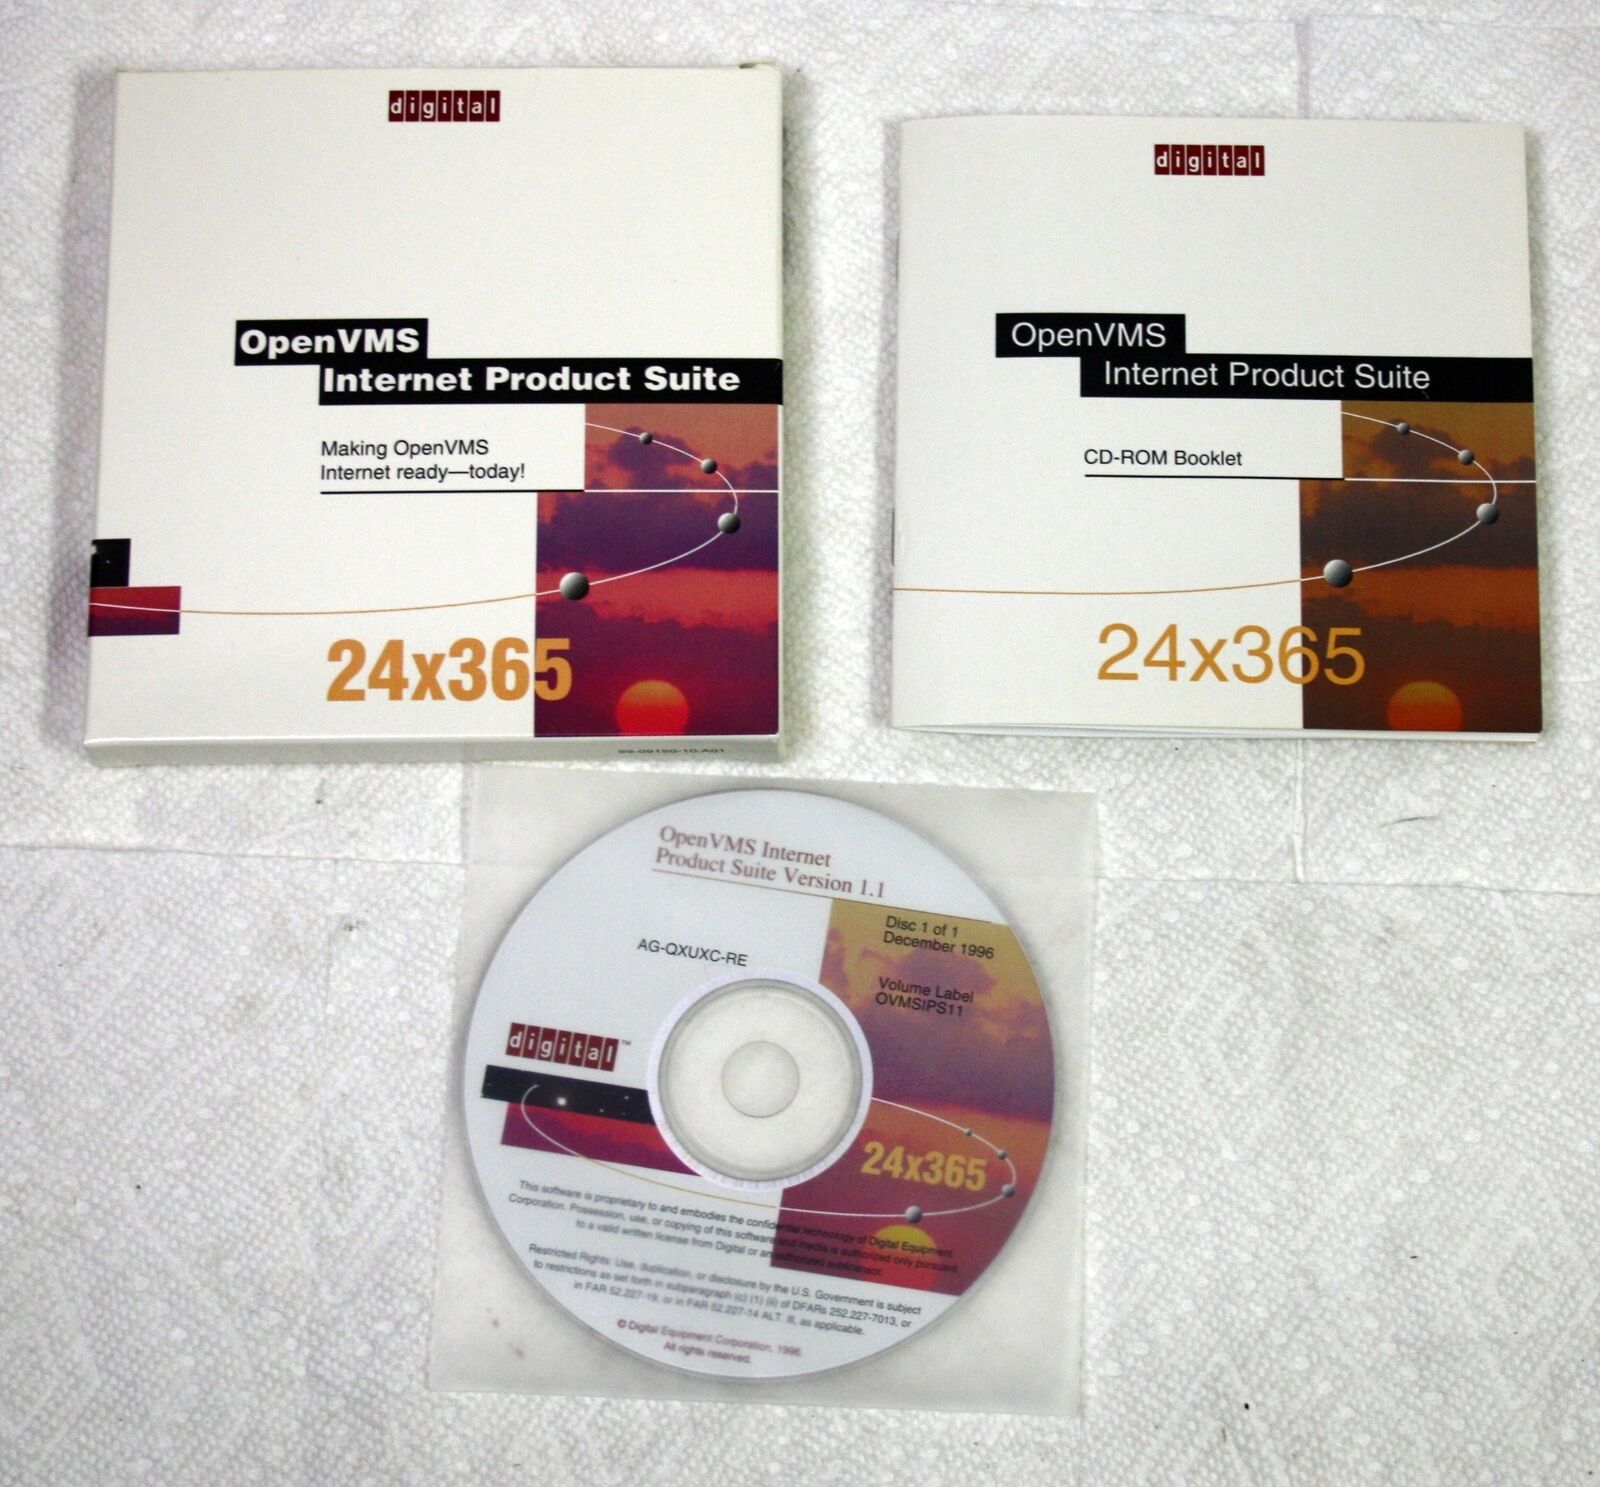 Vintage 1996 Digital DEC OpenVMS Internet Product Suite V1.1 AG-QXUXC-RE VAX